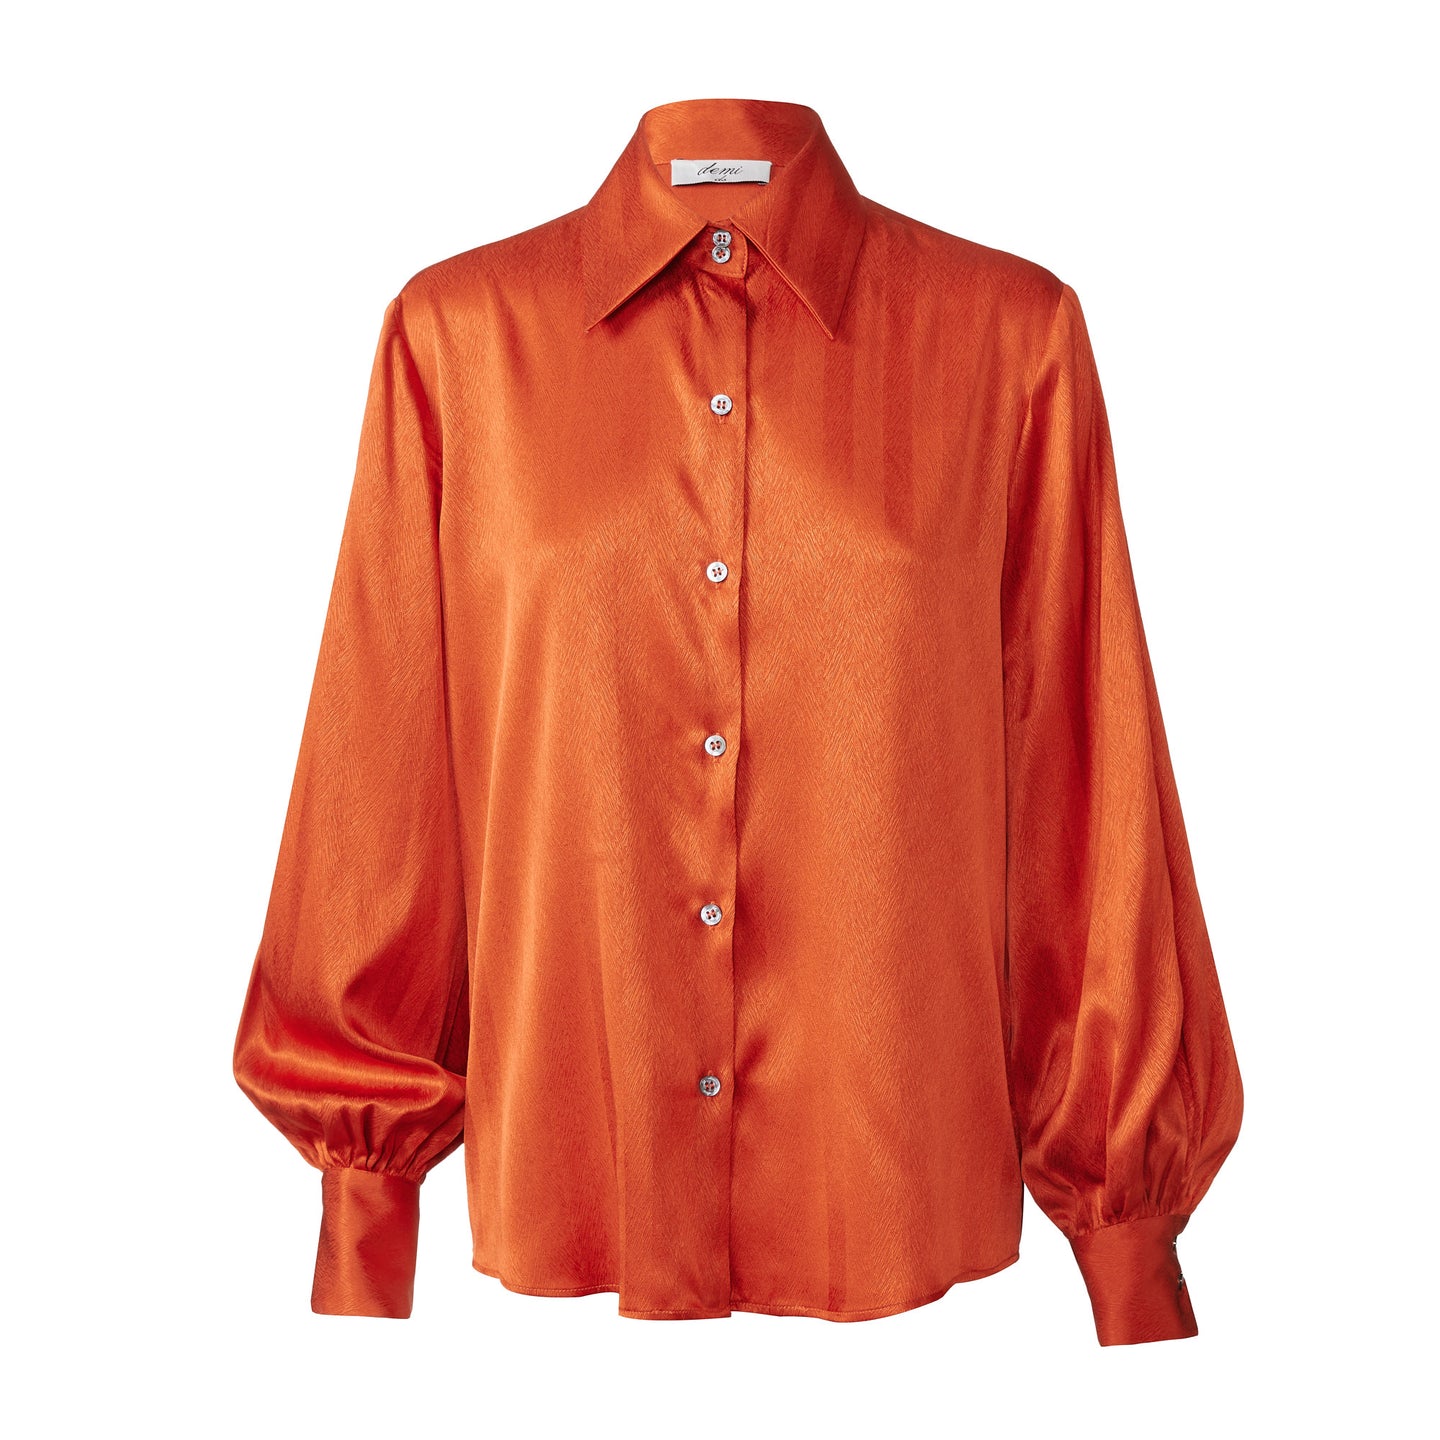 Balloon Sleeve Shirt - Burnt orange jacquard silk